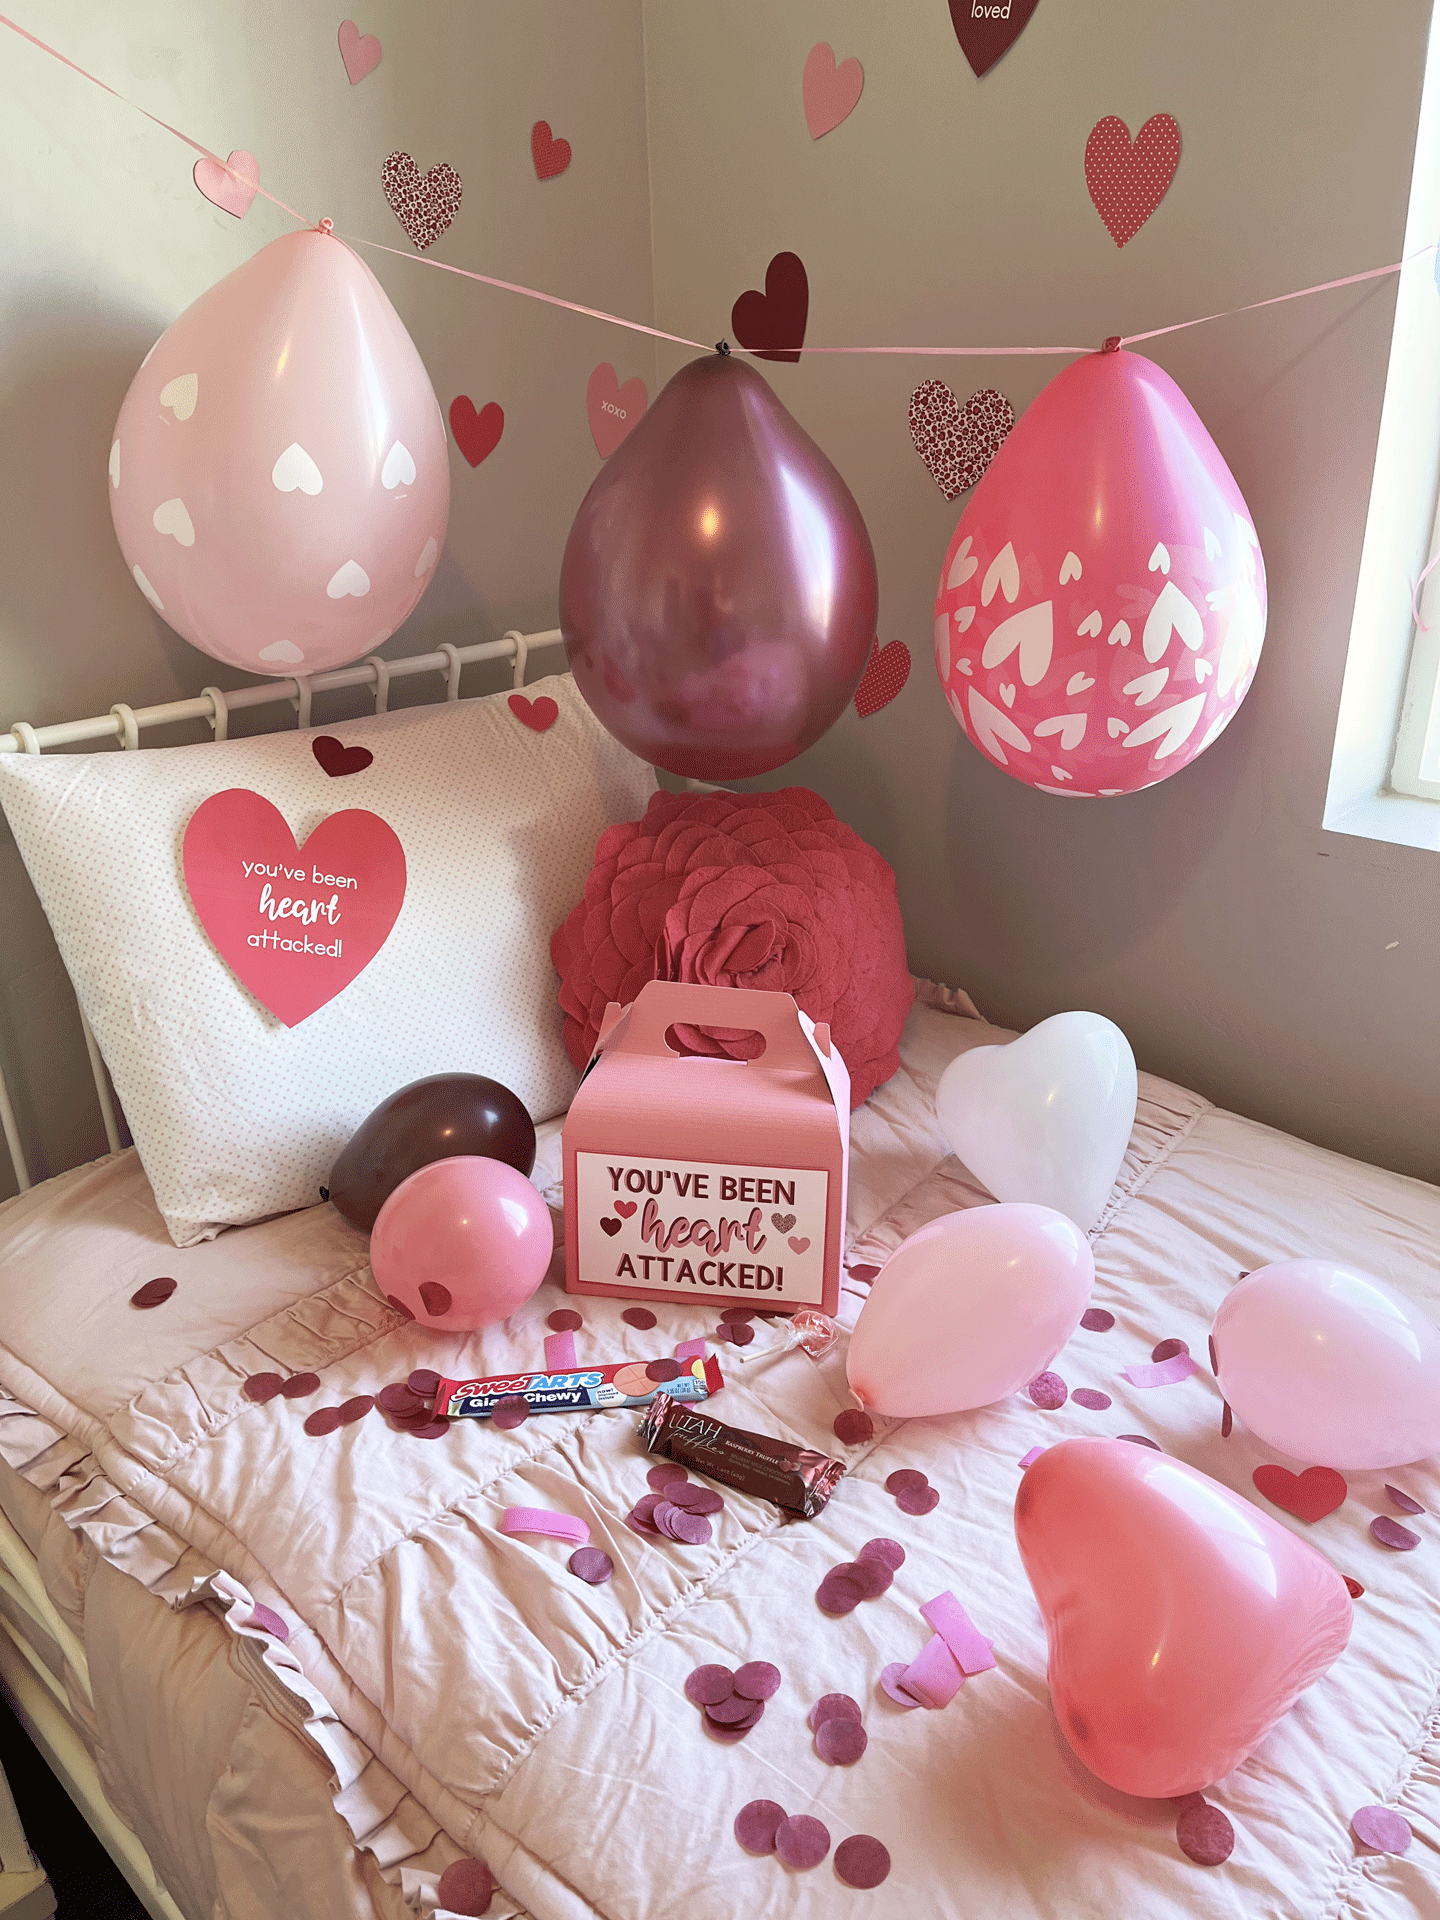 Valentine Gift - Heart Attack Gable Box